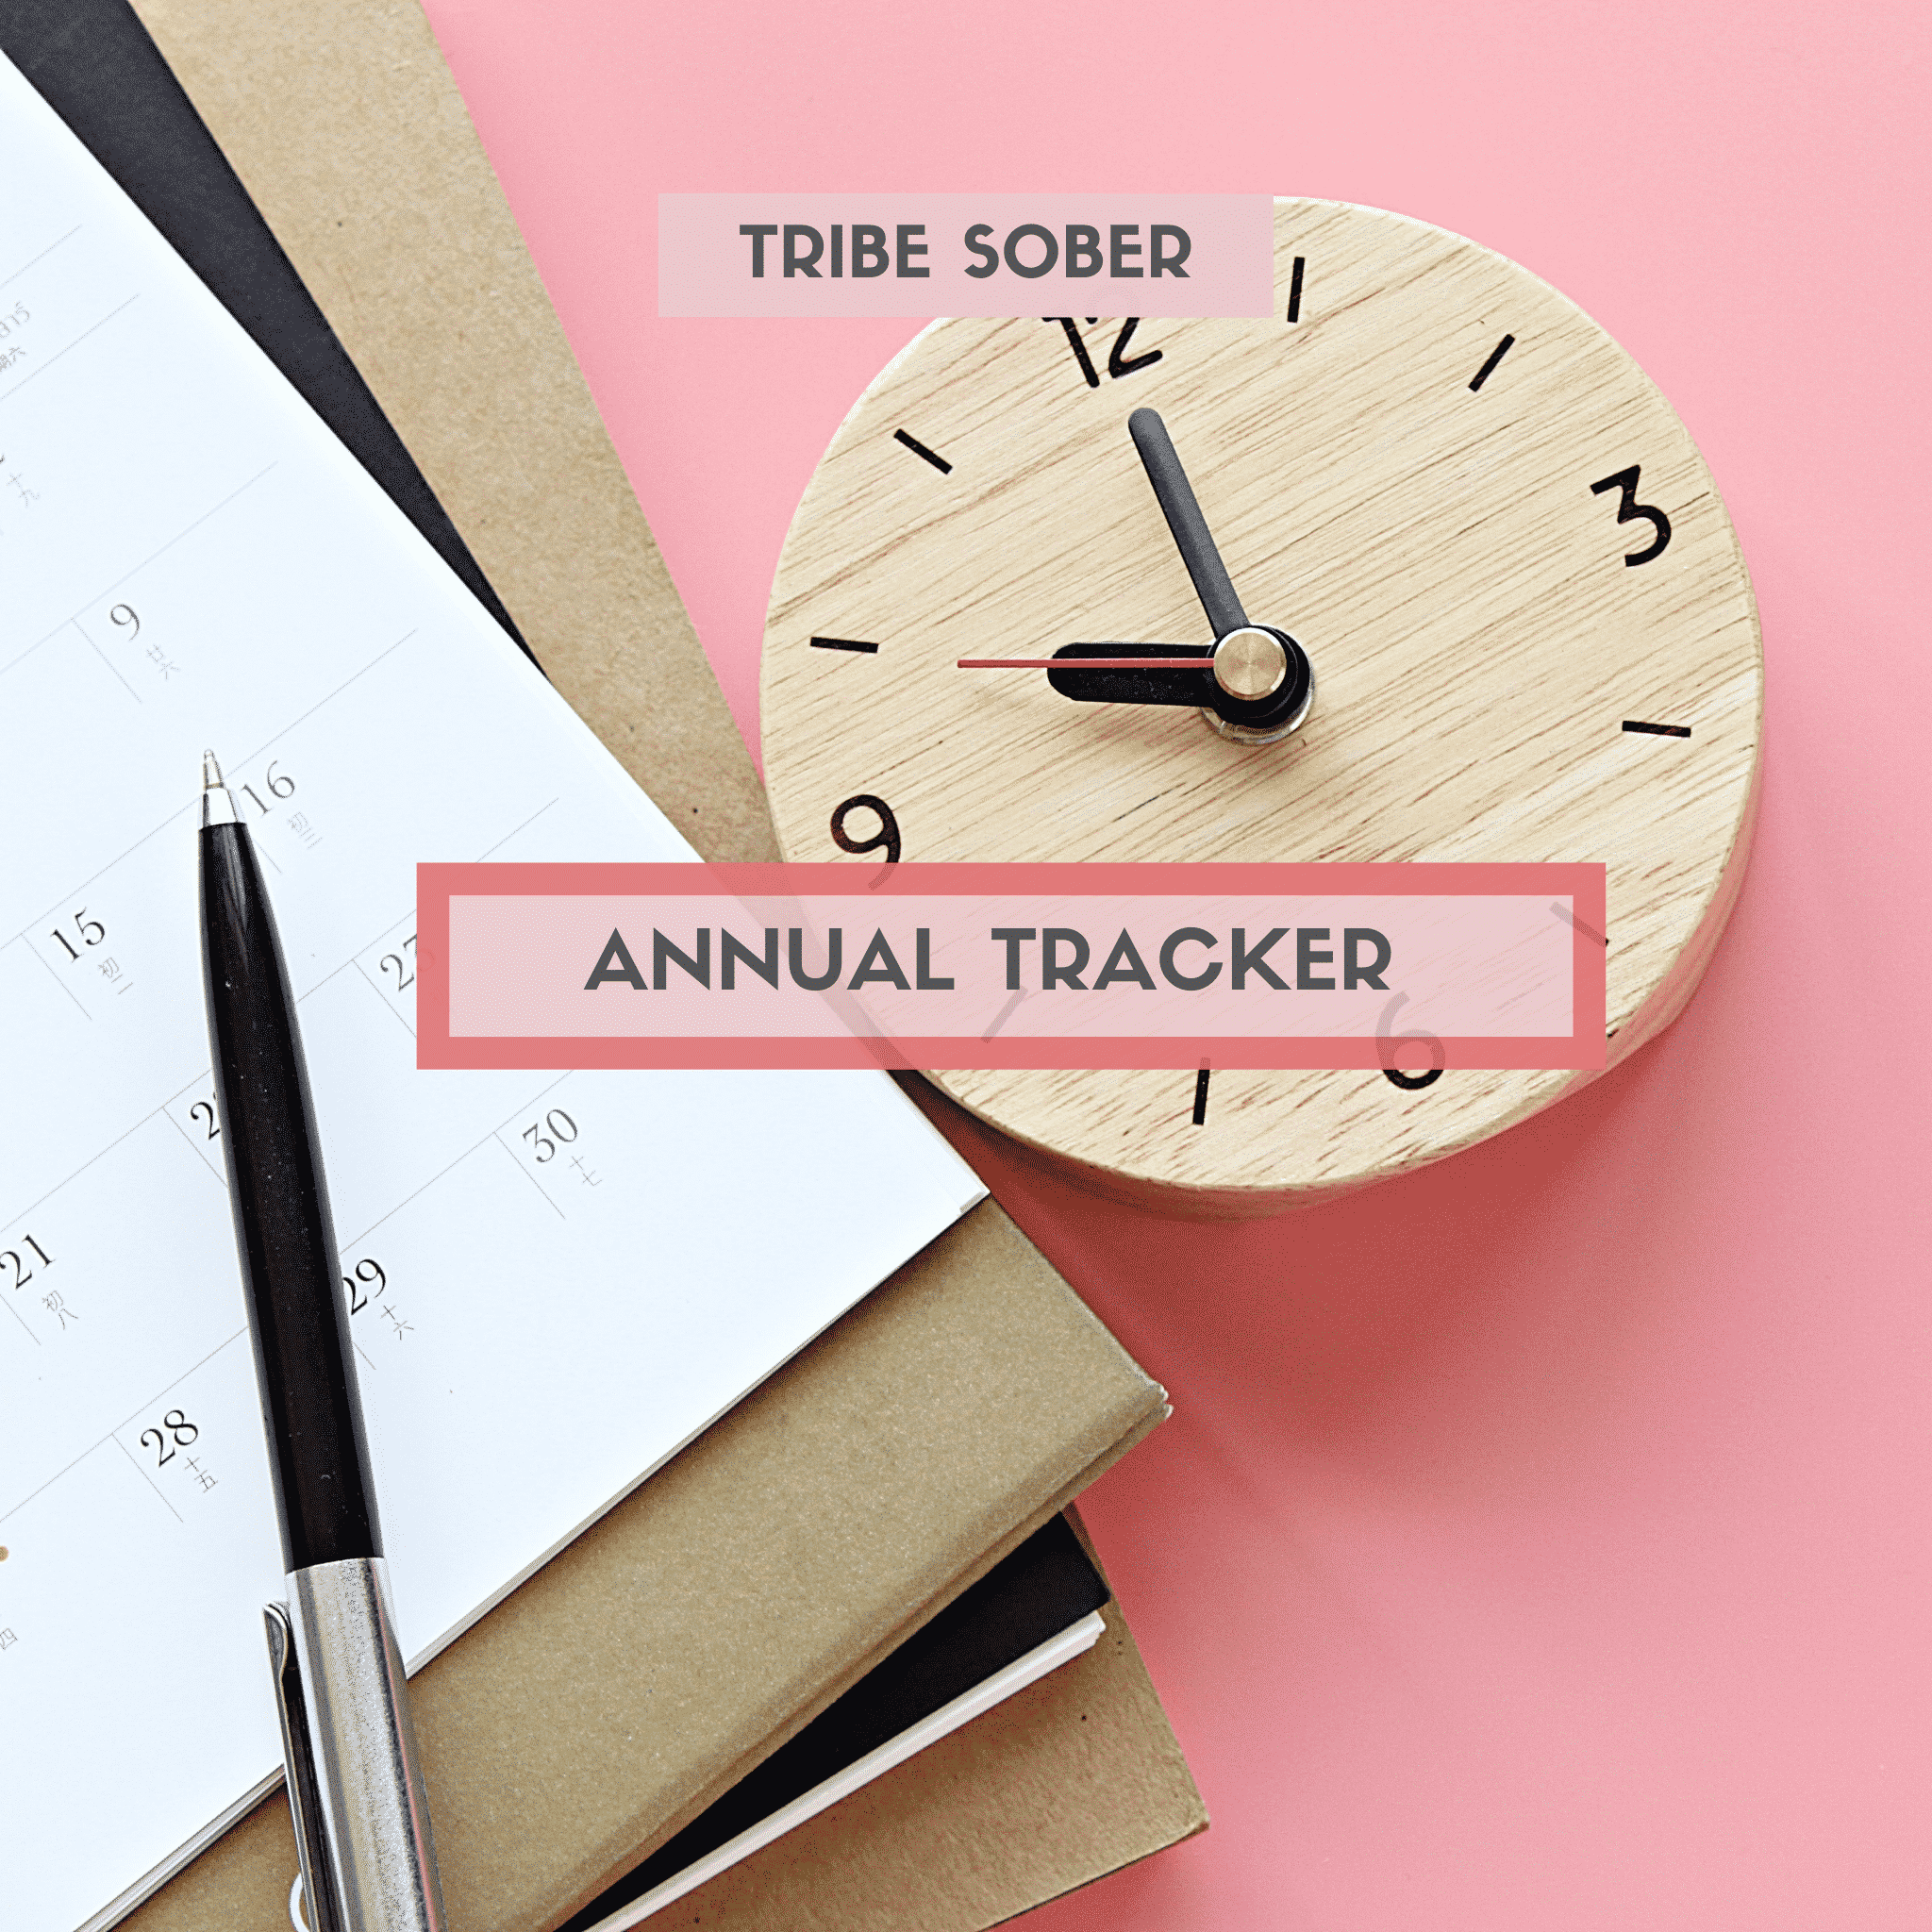 Tribe Sober annual tracker